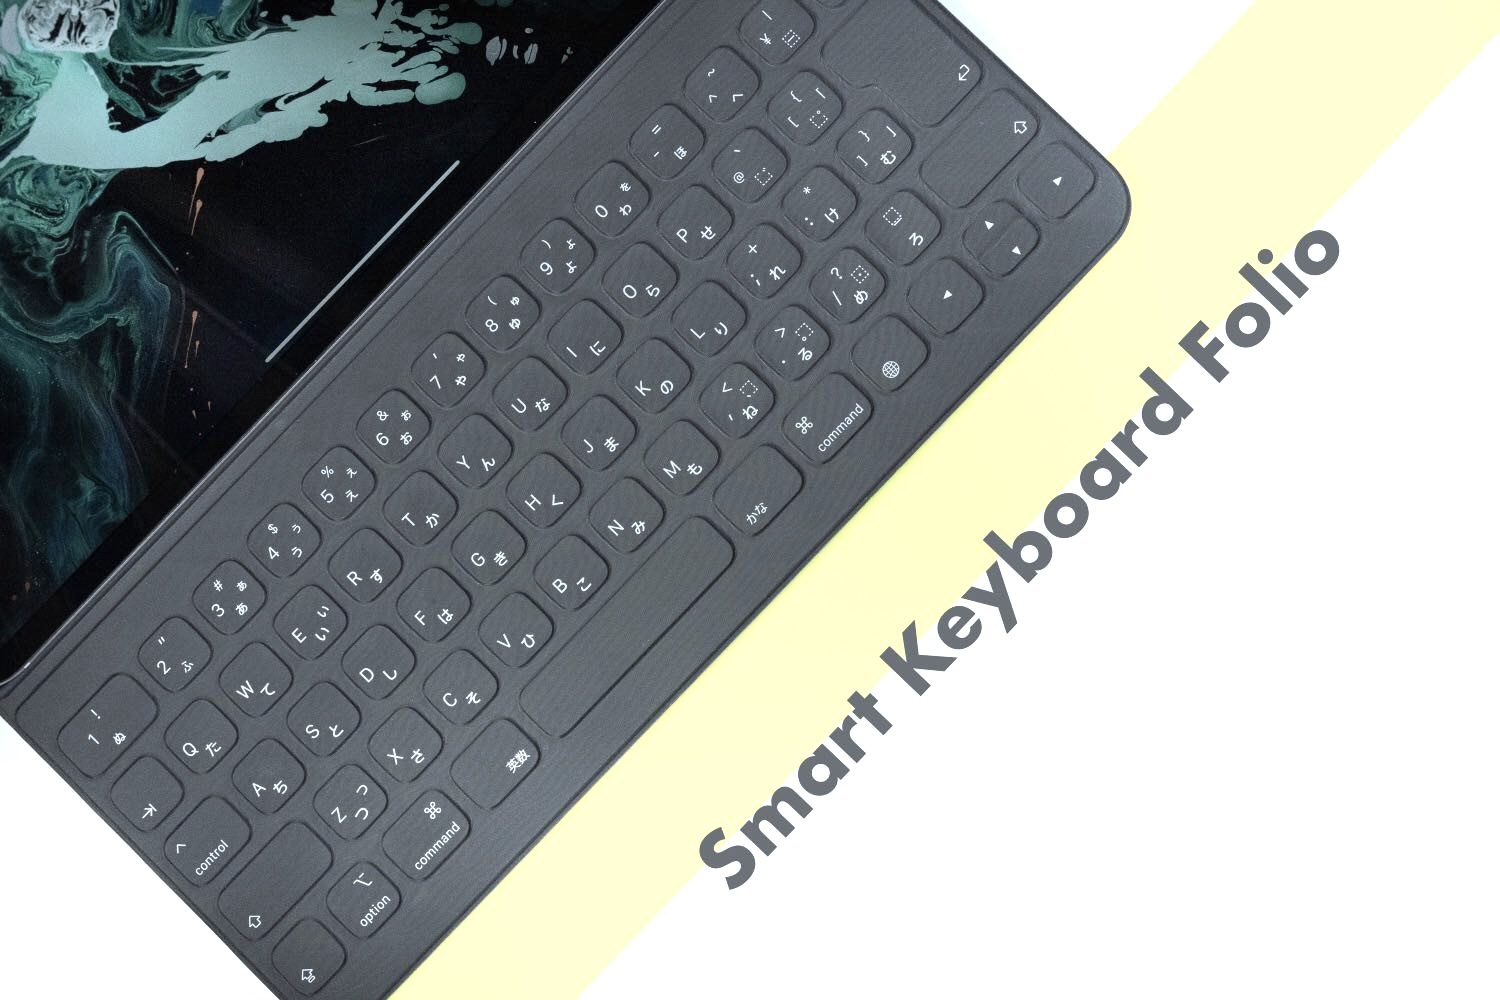 Smart Keyboard Folioレビュー。旧モデルと比べて良いところ、気になるところ。